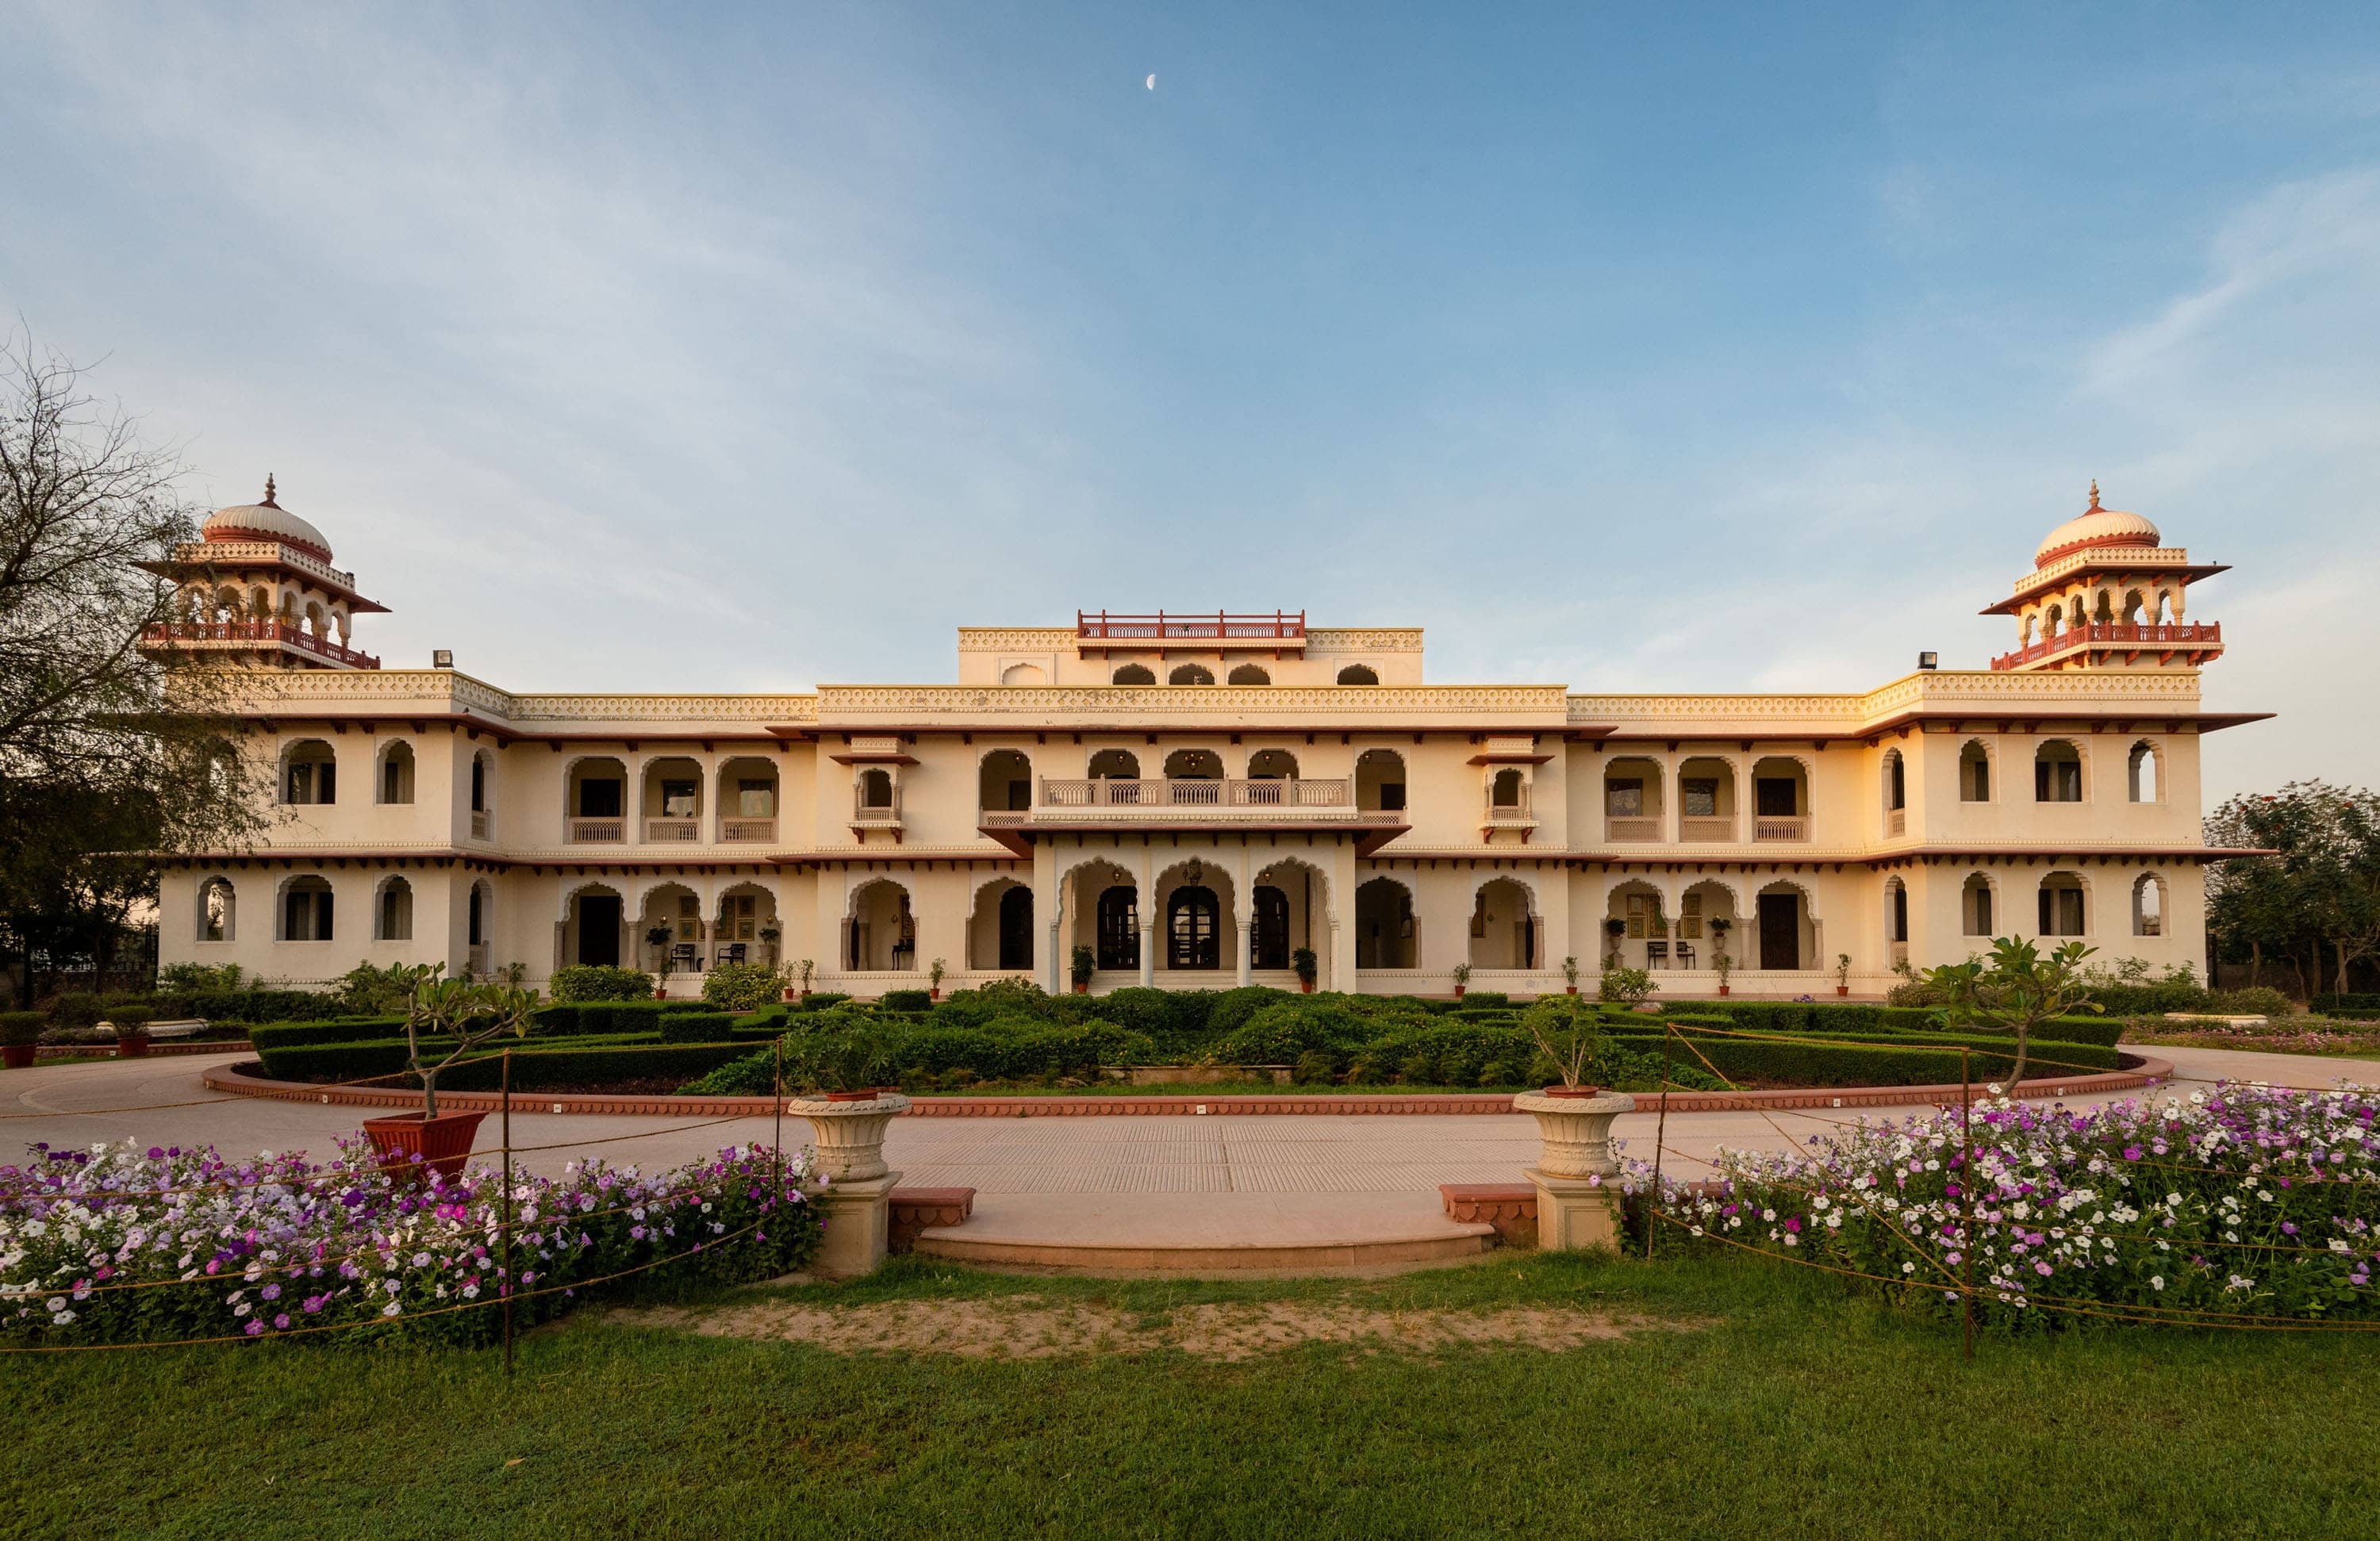 Nazarbagh Palace Jaipur Images